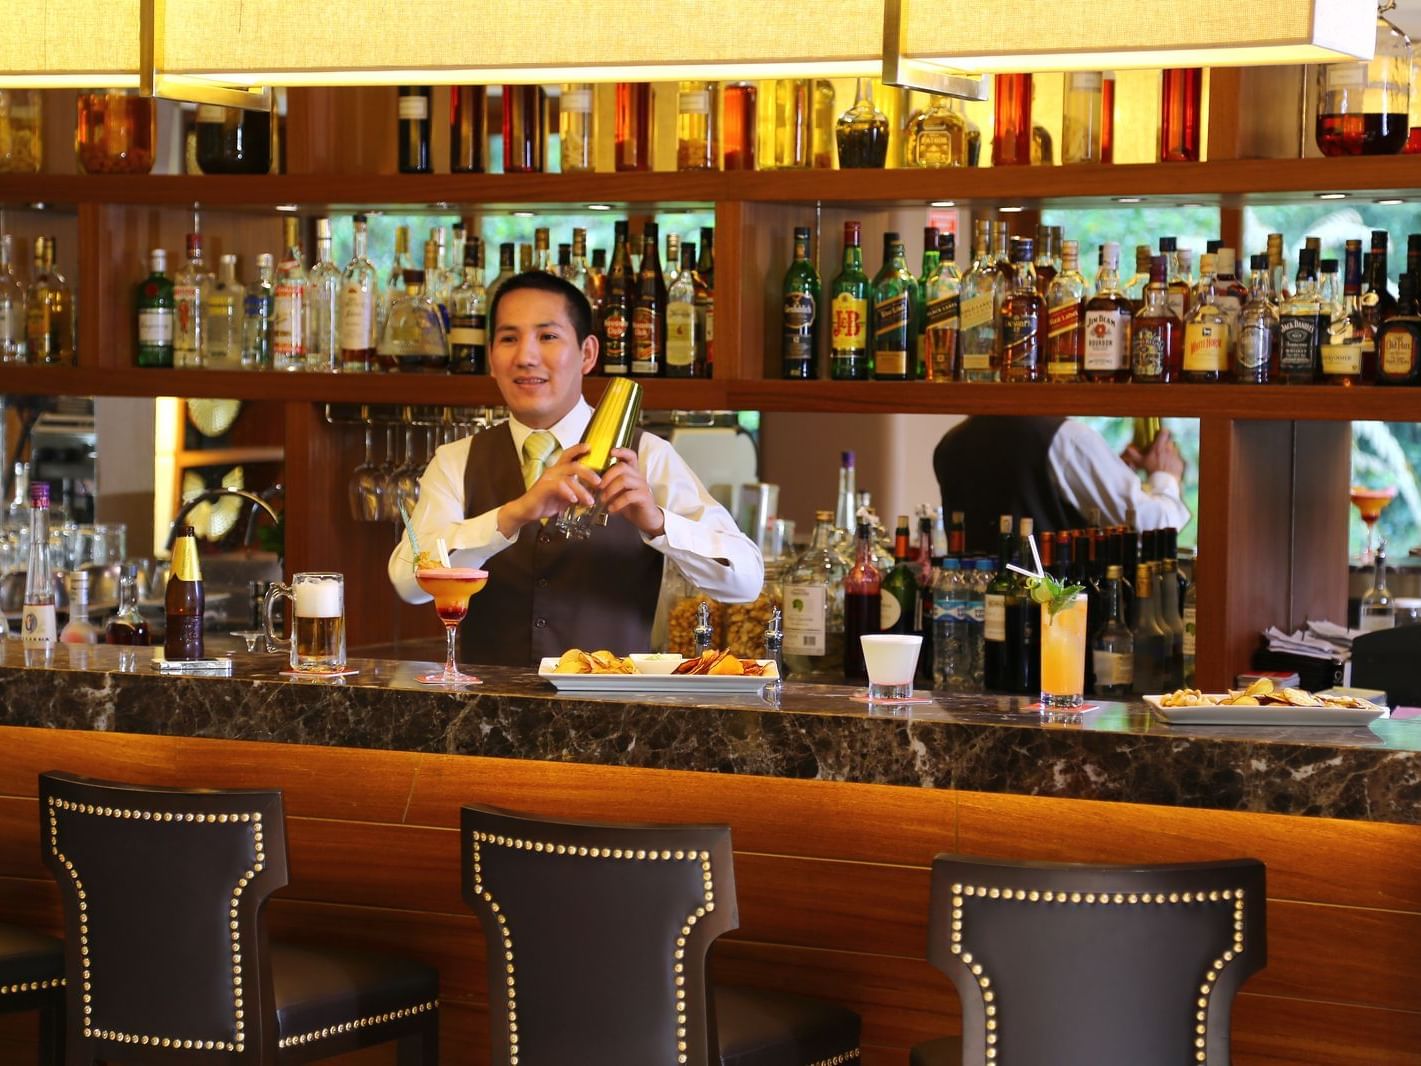 A bartender holding a shaker at Suquy Café & Bar at Hotel Sumaq